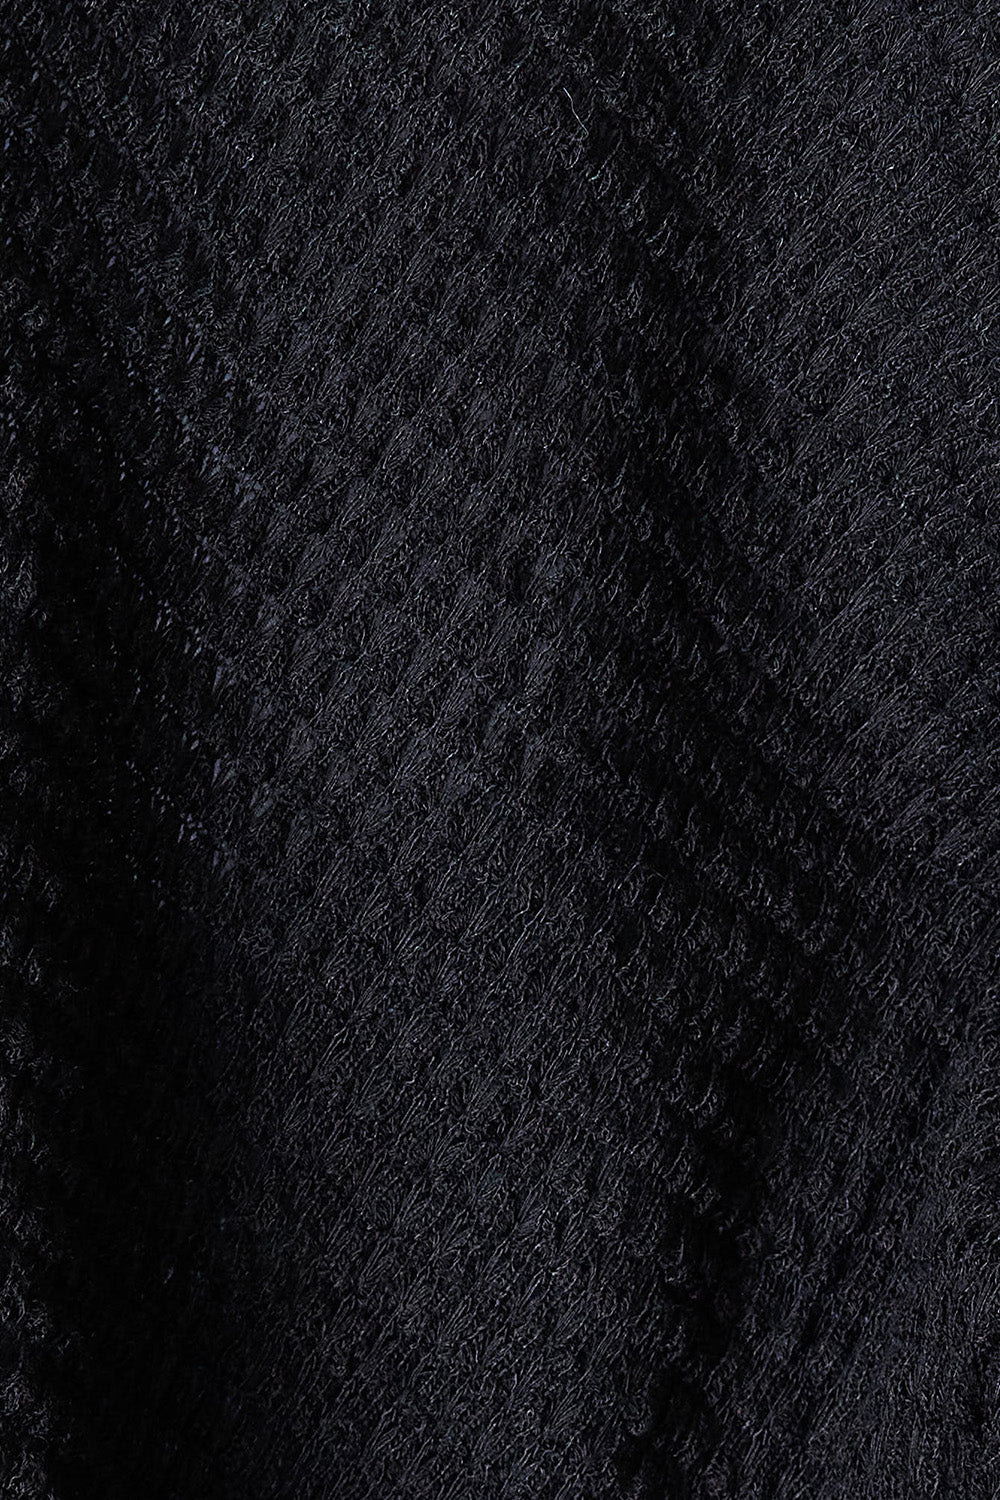 Zenana Full Size Round Neck High-Low Slit Knit Top